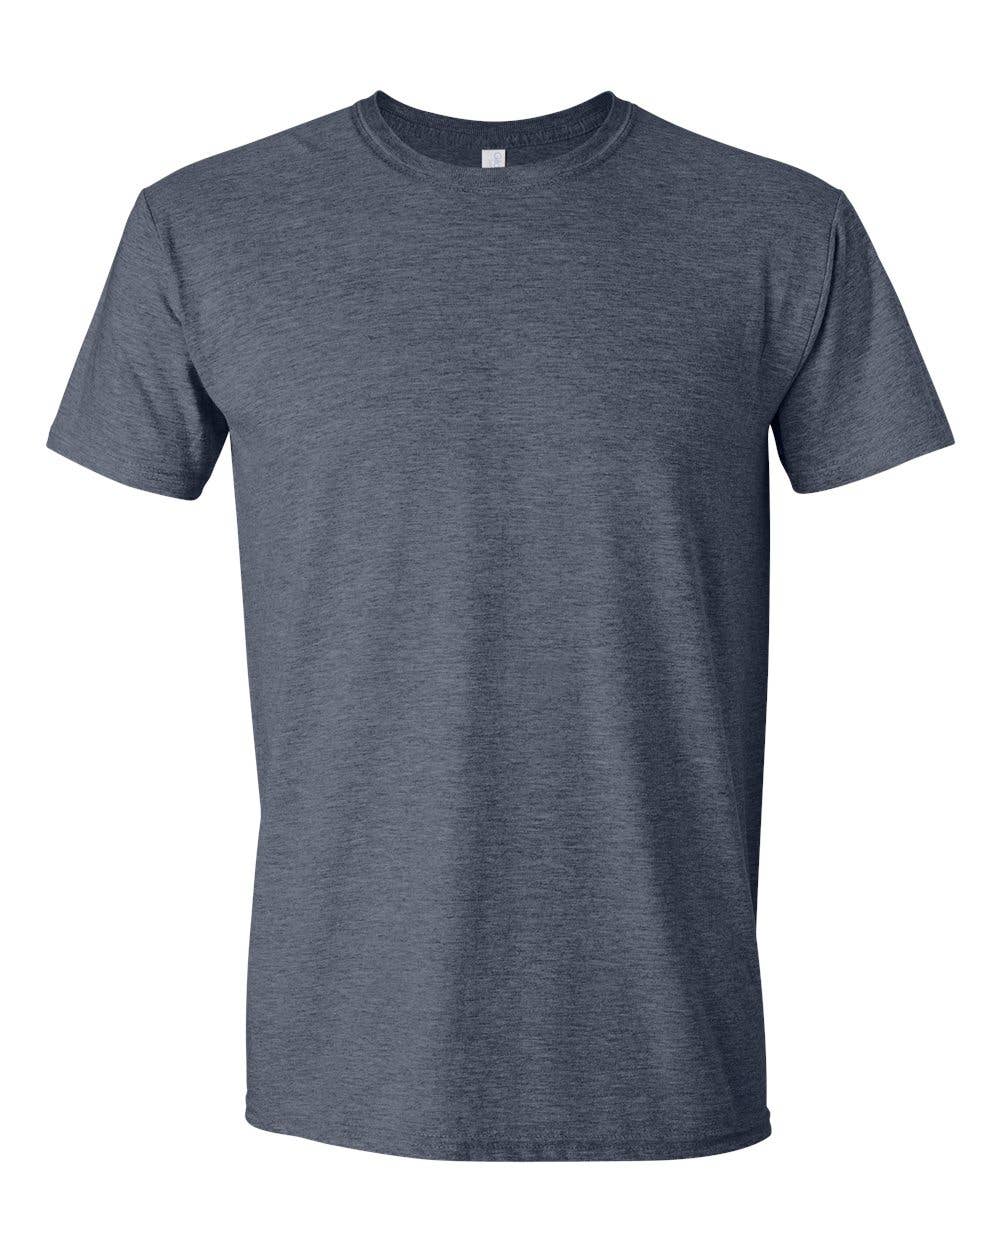 Gildan Soft Adult Shirt, Blank Unisex T-shirt: L / White